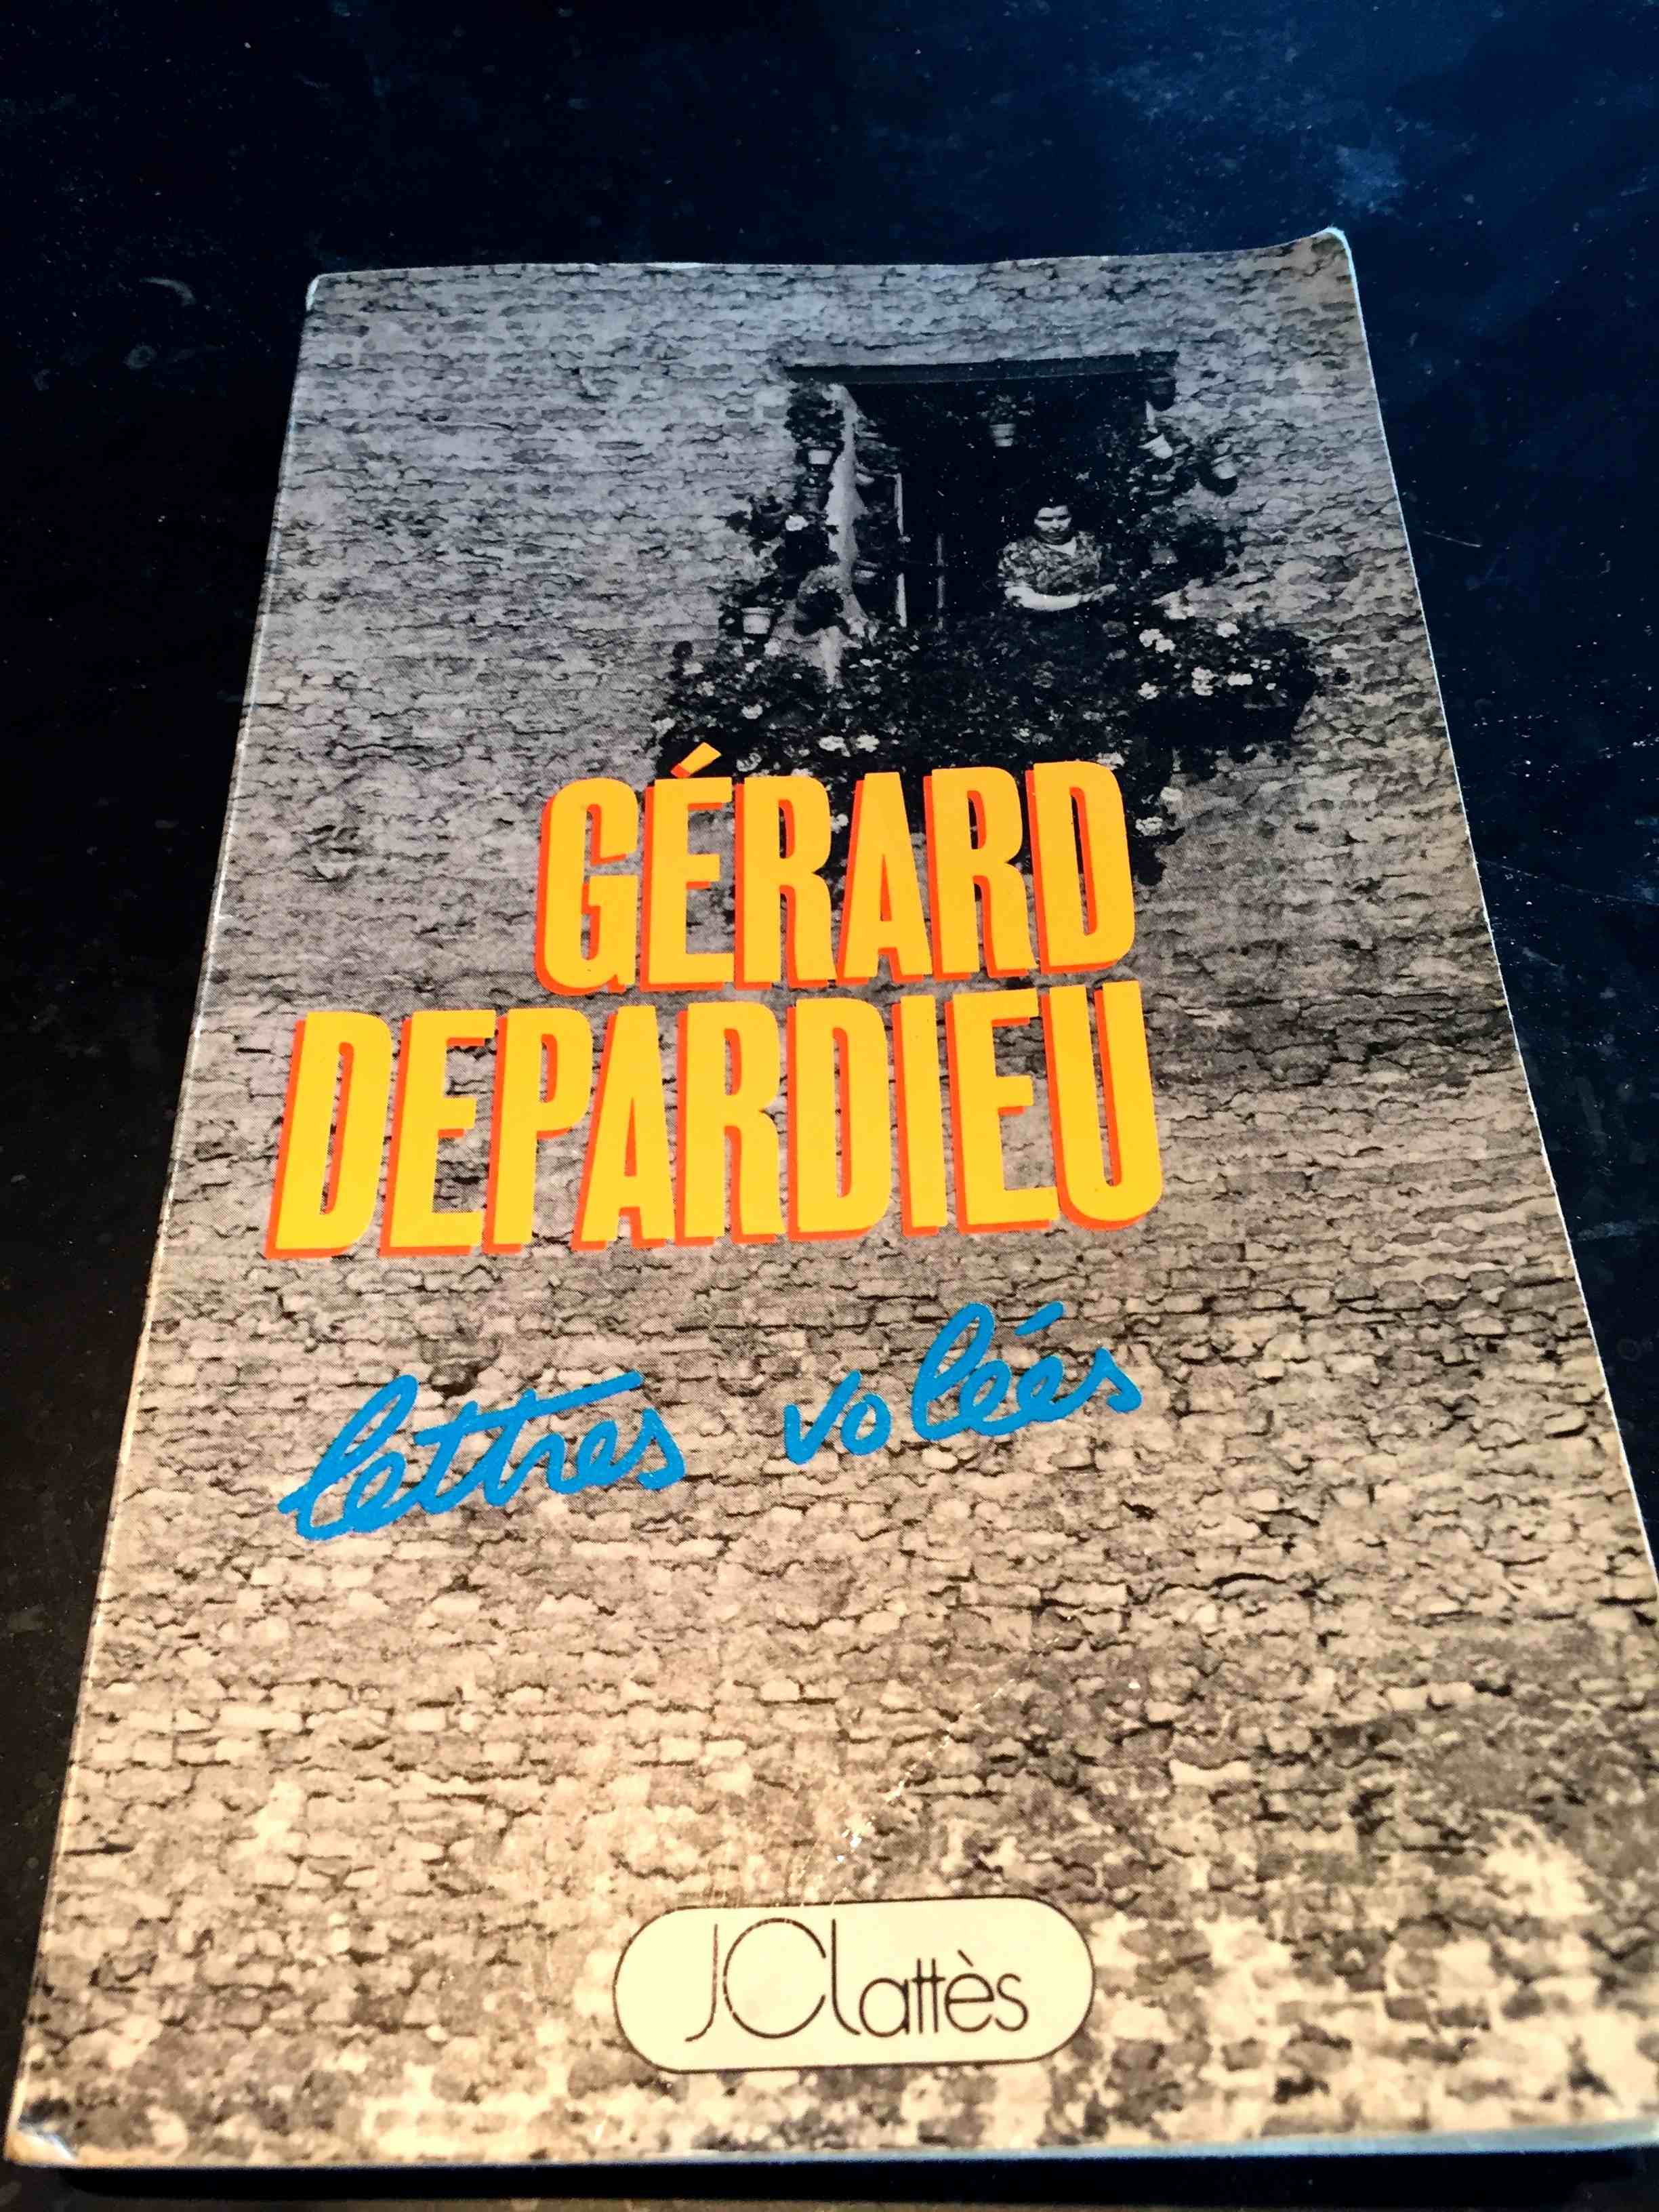 Depardieu